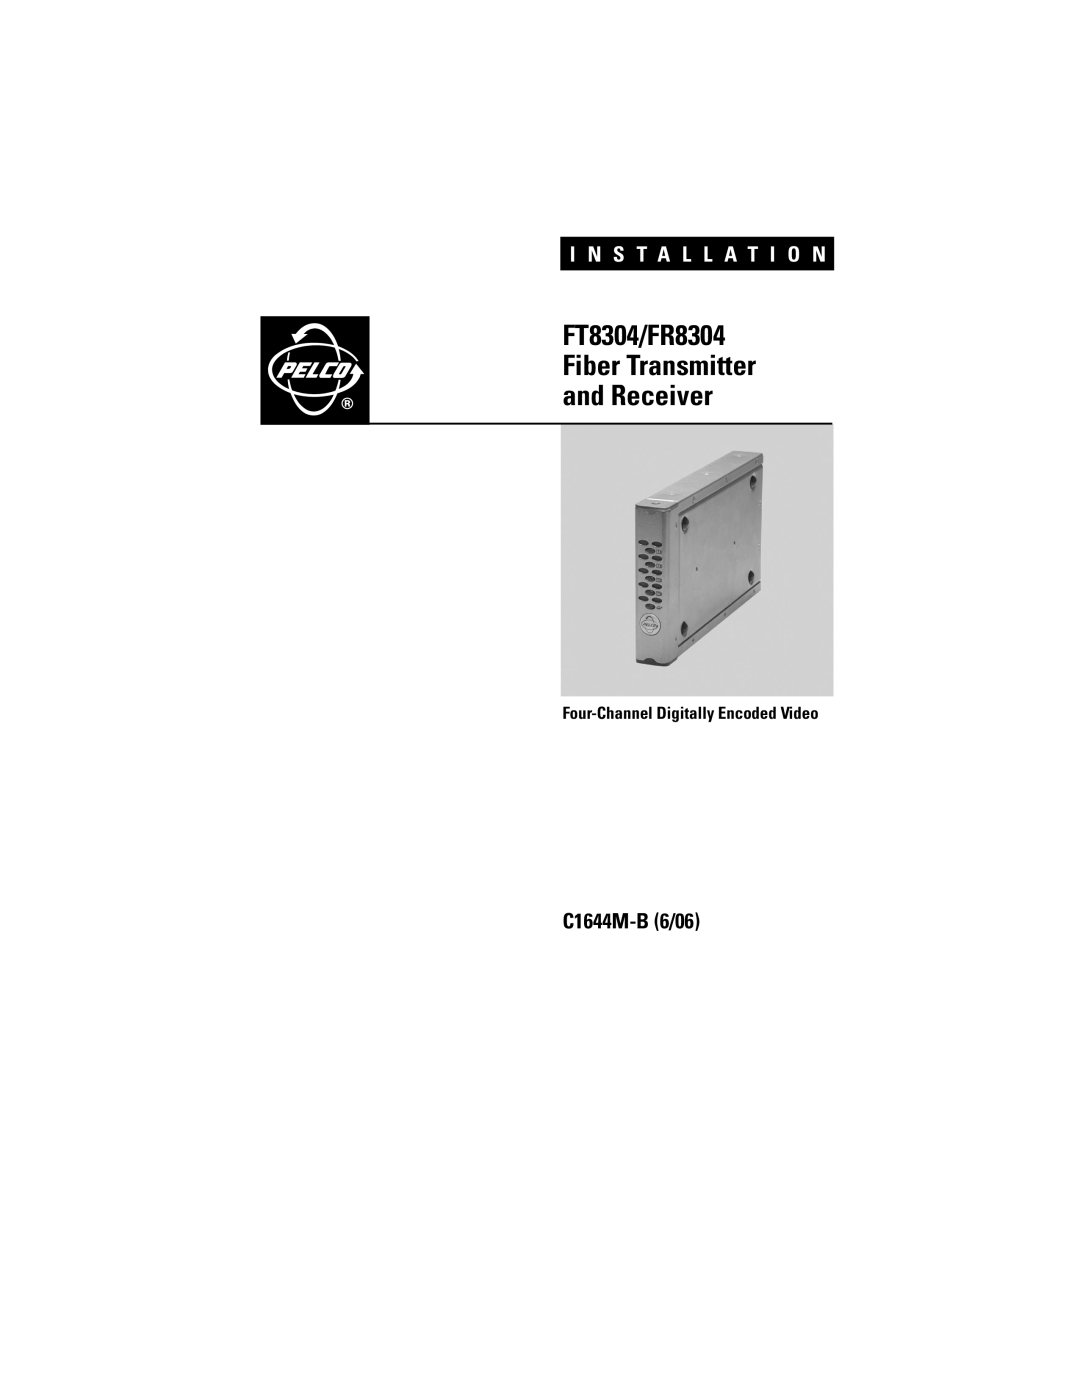 Pelco manual FT8304/FR8304 Fiber Transmitter and Receiver, C1644M-B 6/06, I N S T A L L A T I O N 